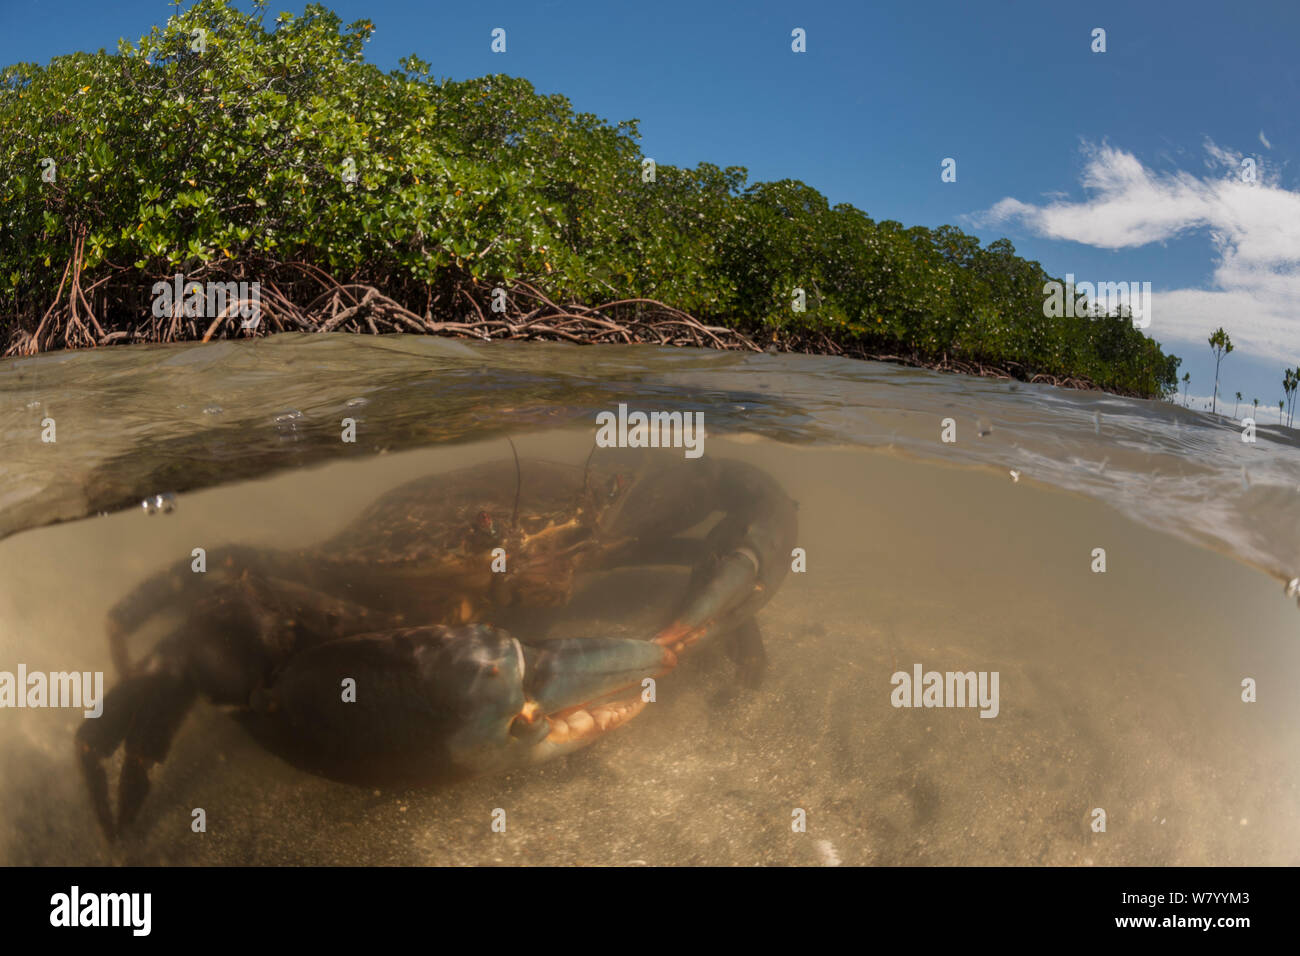 Schlamm Krabben (Scylla serrata) im Wasser von Mangrovenwurzeln, 2 Ebenen Bild, Mali Insel, Macuata Provinz, Fidschi, South Pacific. Stockfoto